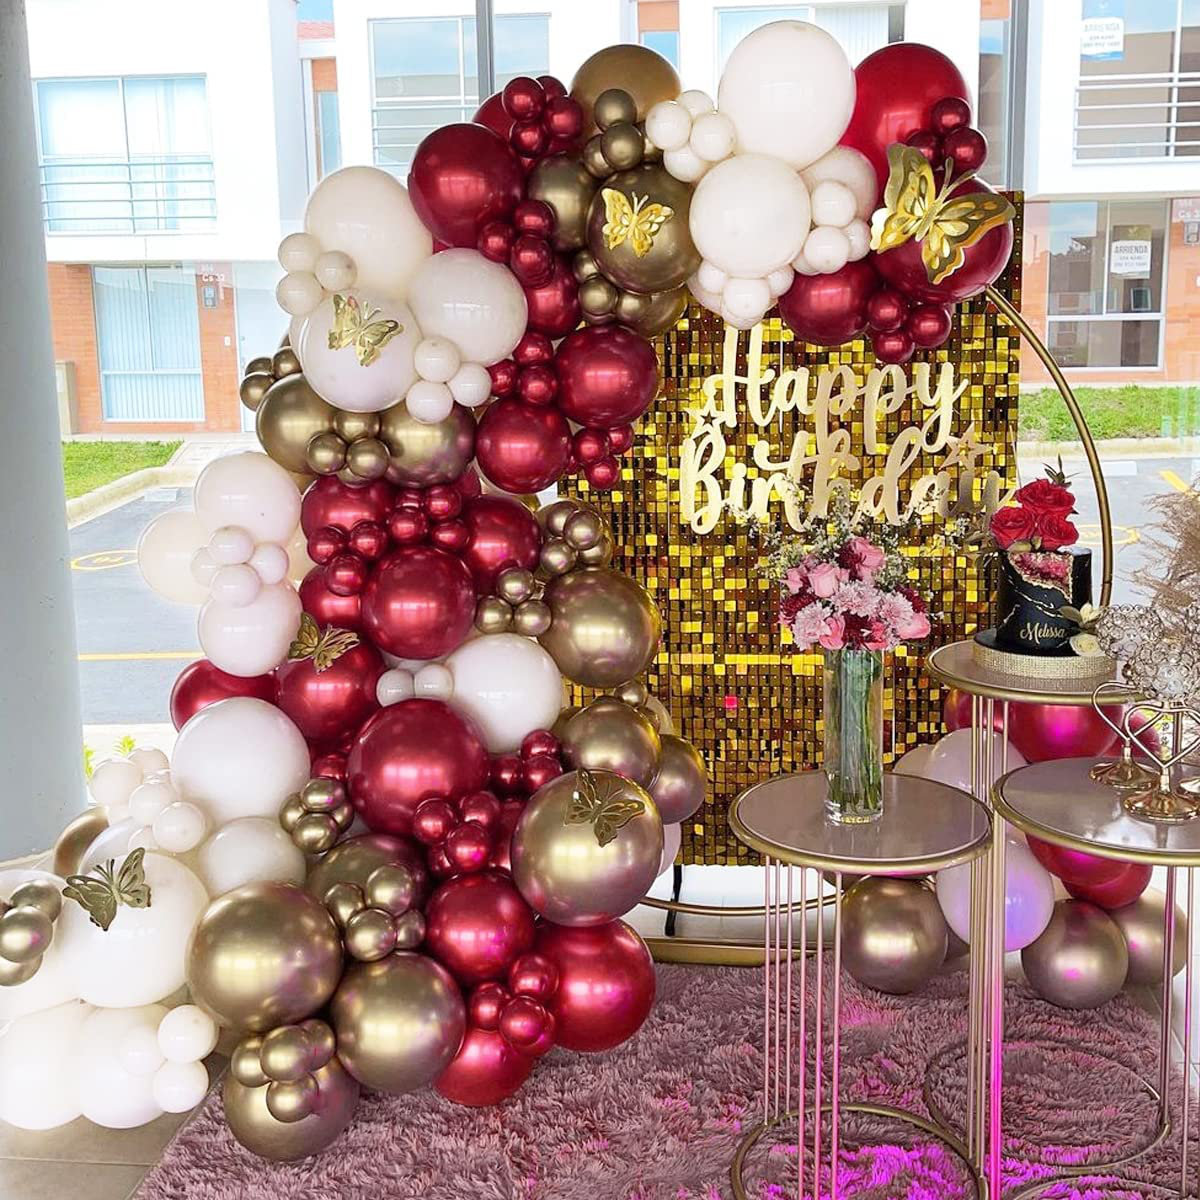 AYUQI Pastel Balloon Arch Kit, 53 Pcs Birthday Party Decorations